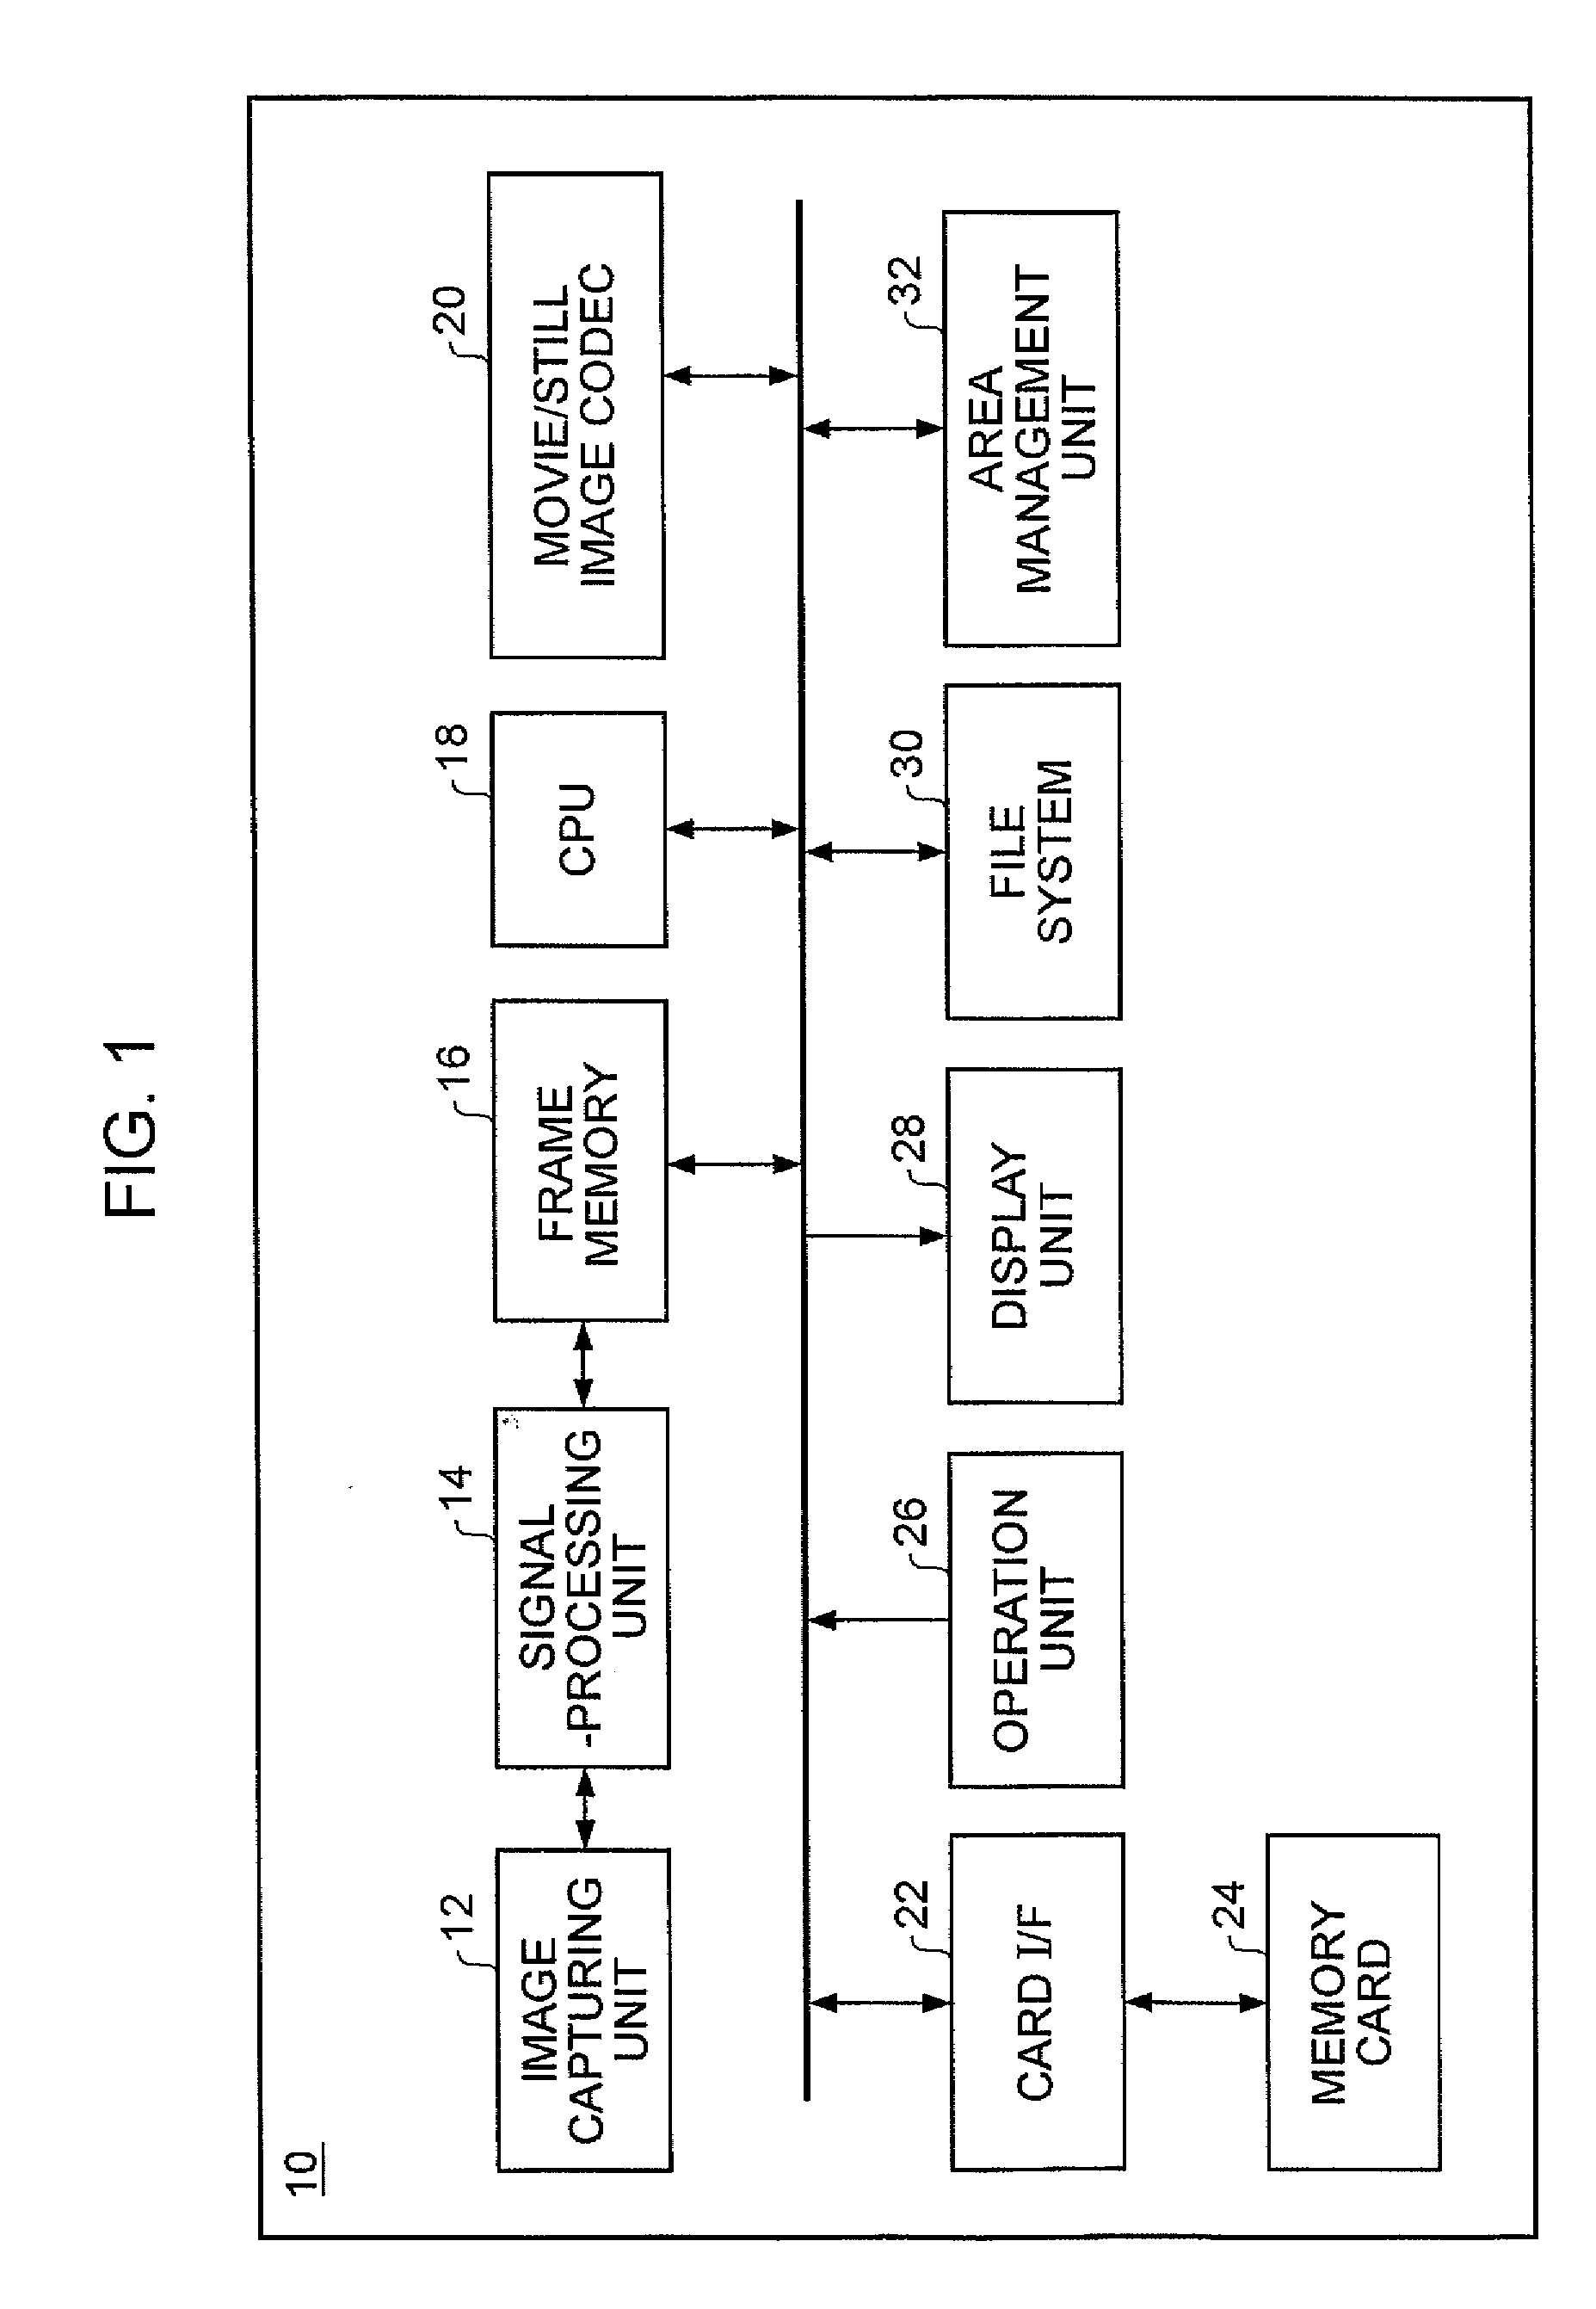 Image data recording apparatus and method